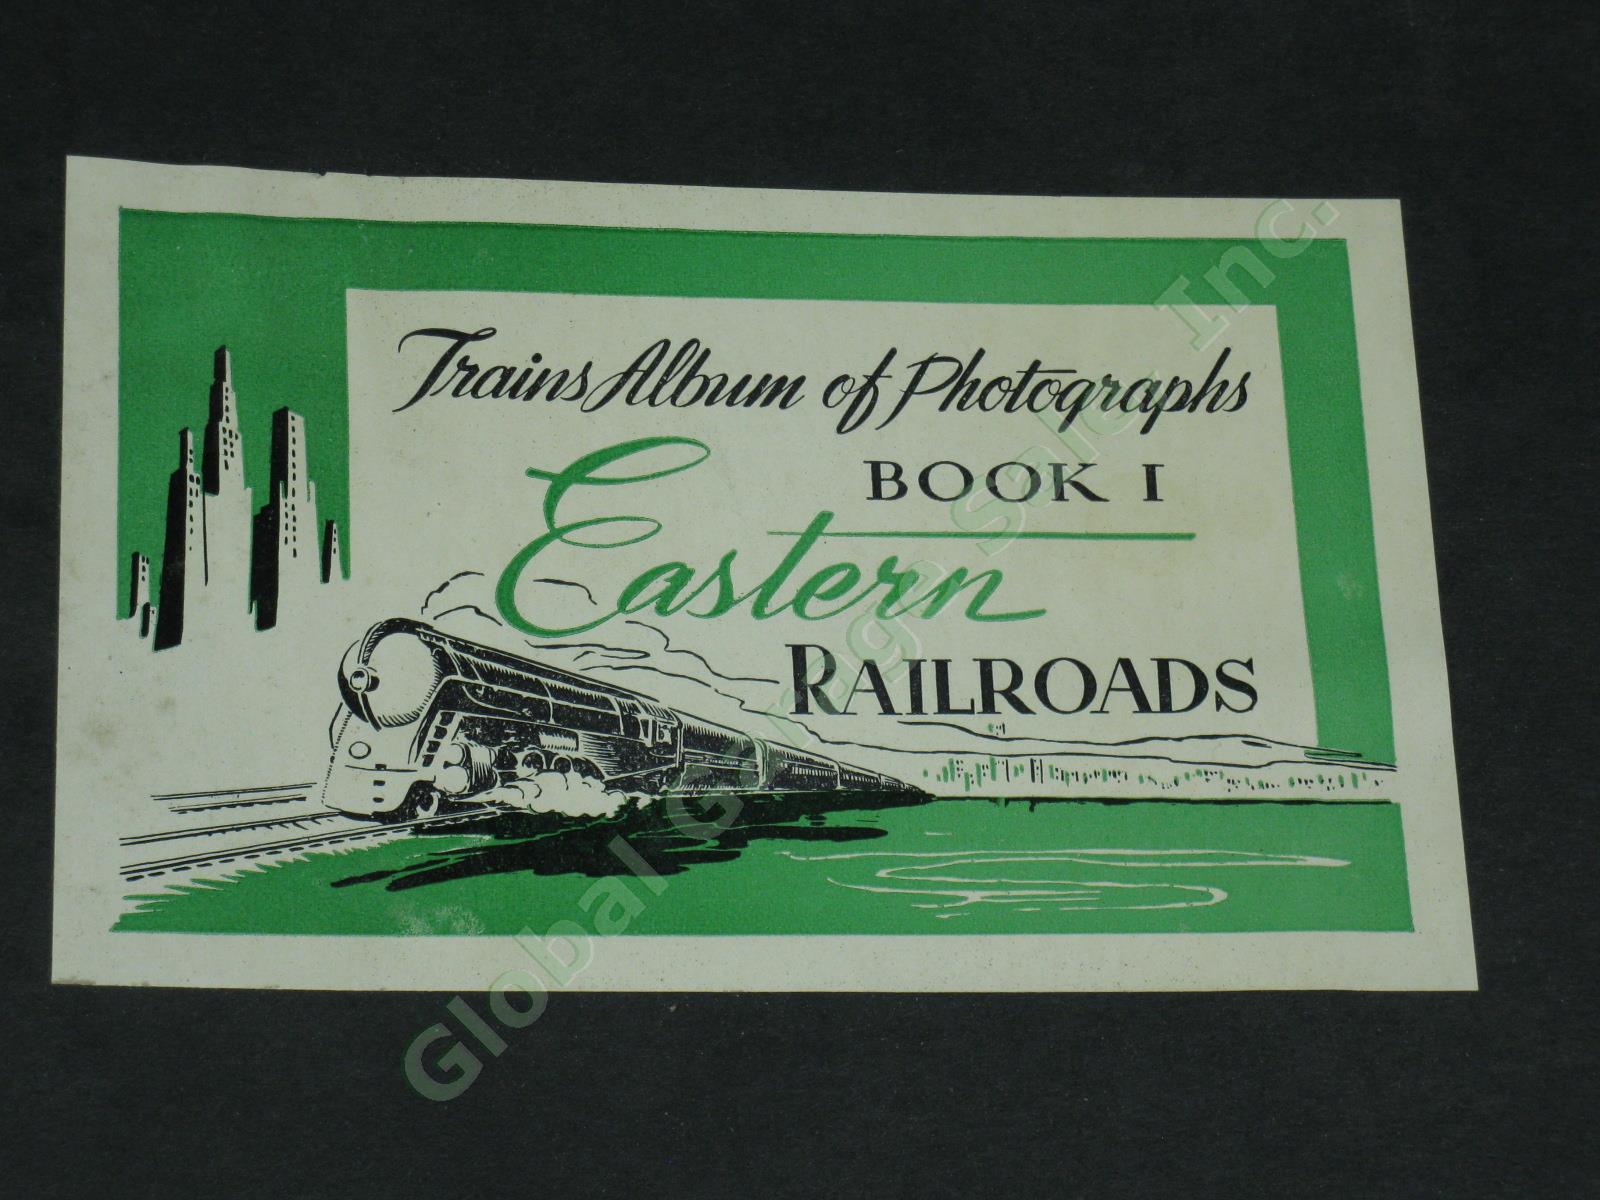 18 Vtg Kalmbach 1943-47 Train Albums Of Railroad Photographs Book Lot NO RESERVE 1